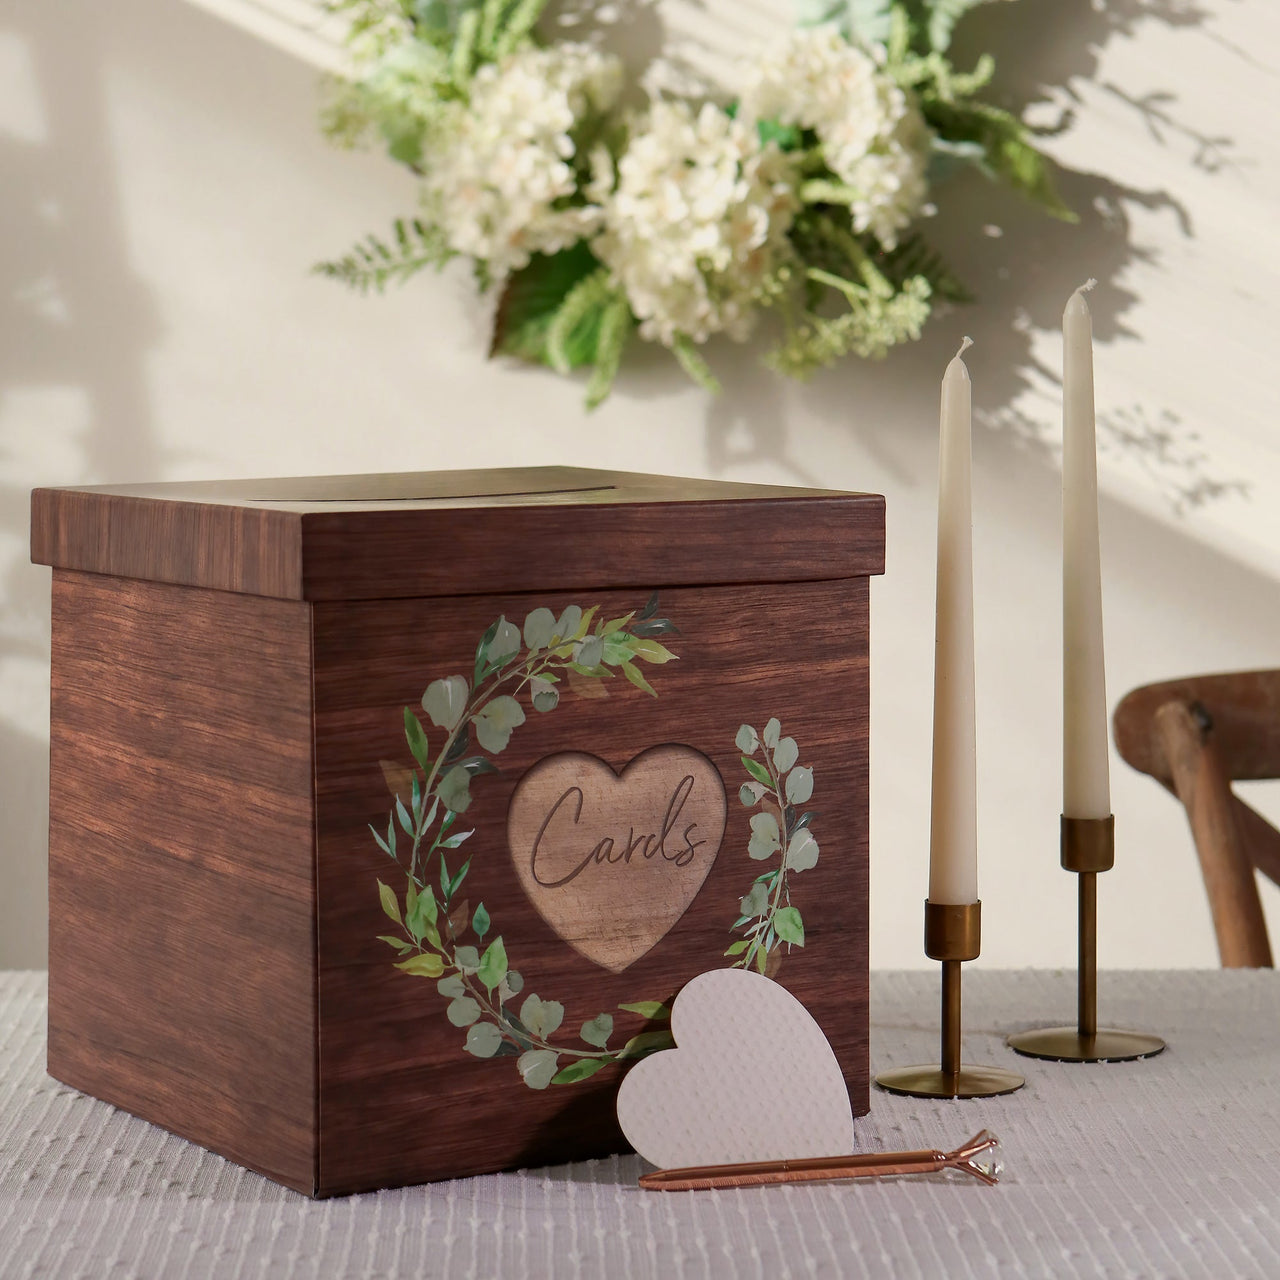 Rustic Brown Wood Card Box - Updated Alternate Image 4 - My Wedding Favors